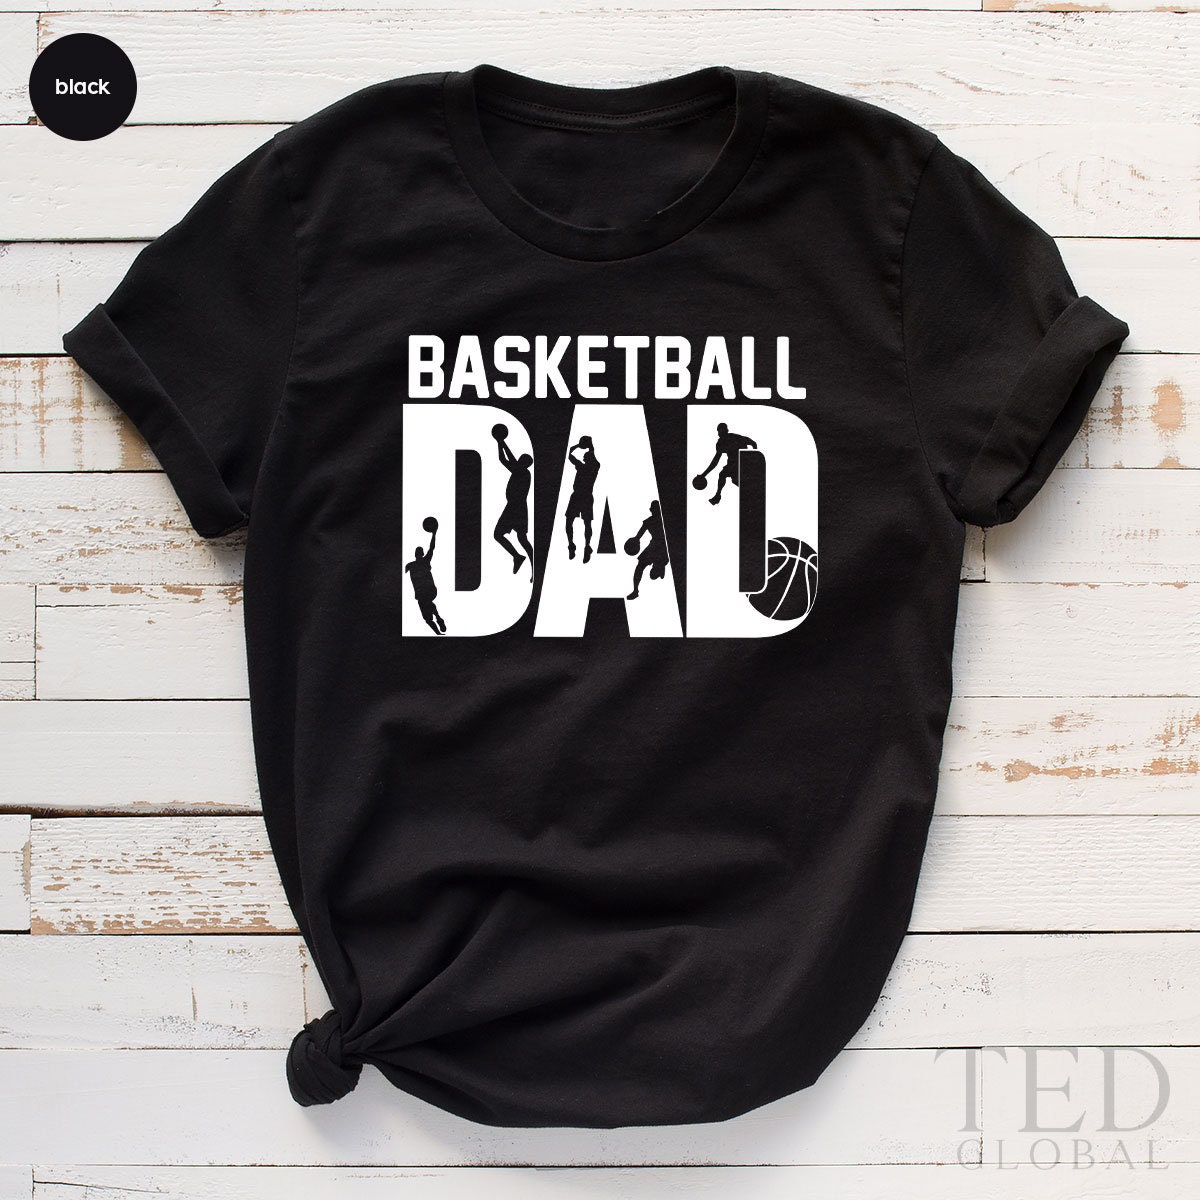 Basketball Dad Shirt, Basketball Lover TShirt, Basketball Shirt Men, Fathers Day Gift, Dad Birthday Gift, Basketball T-Shirt, Gifts For Dad - Fastdeliverytees.com